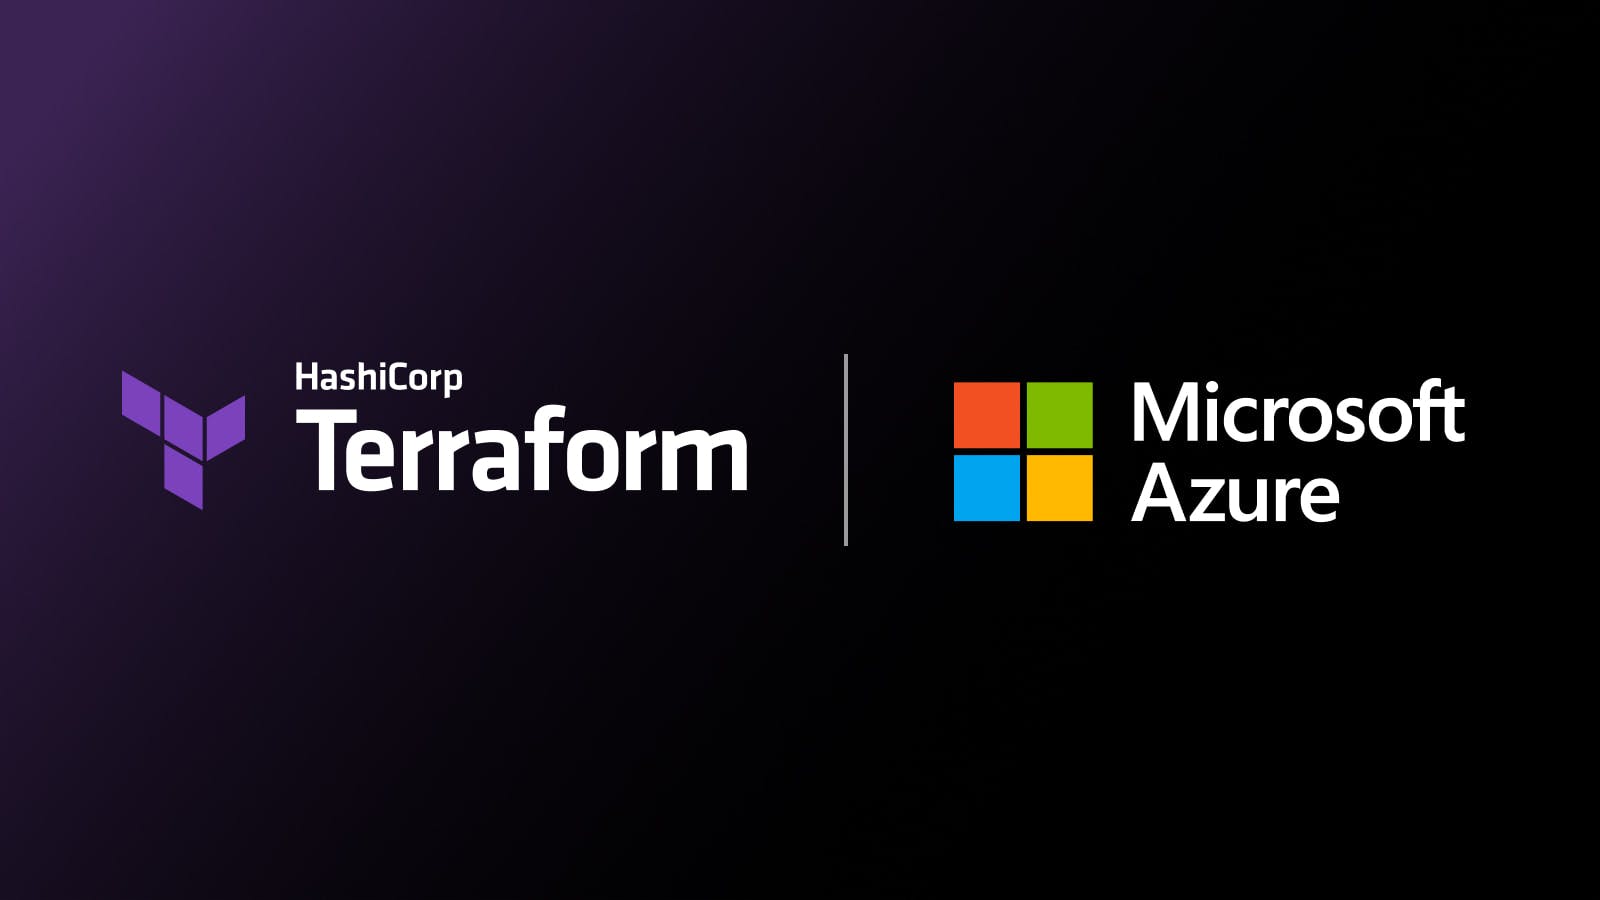 HashiCorp Terraform and Microsoft Azure